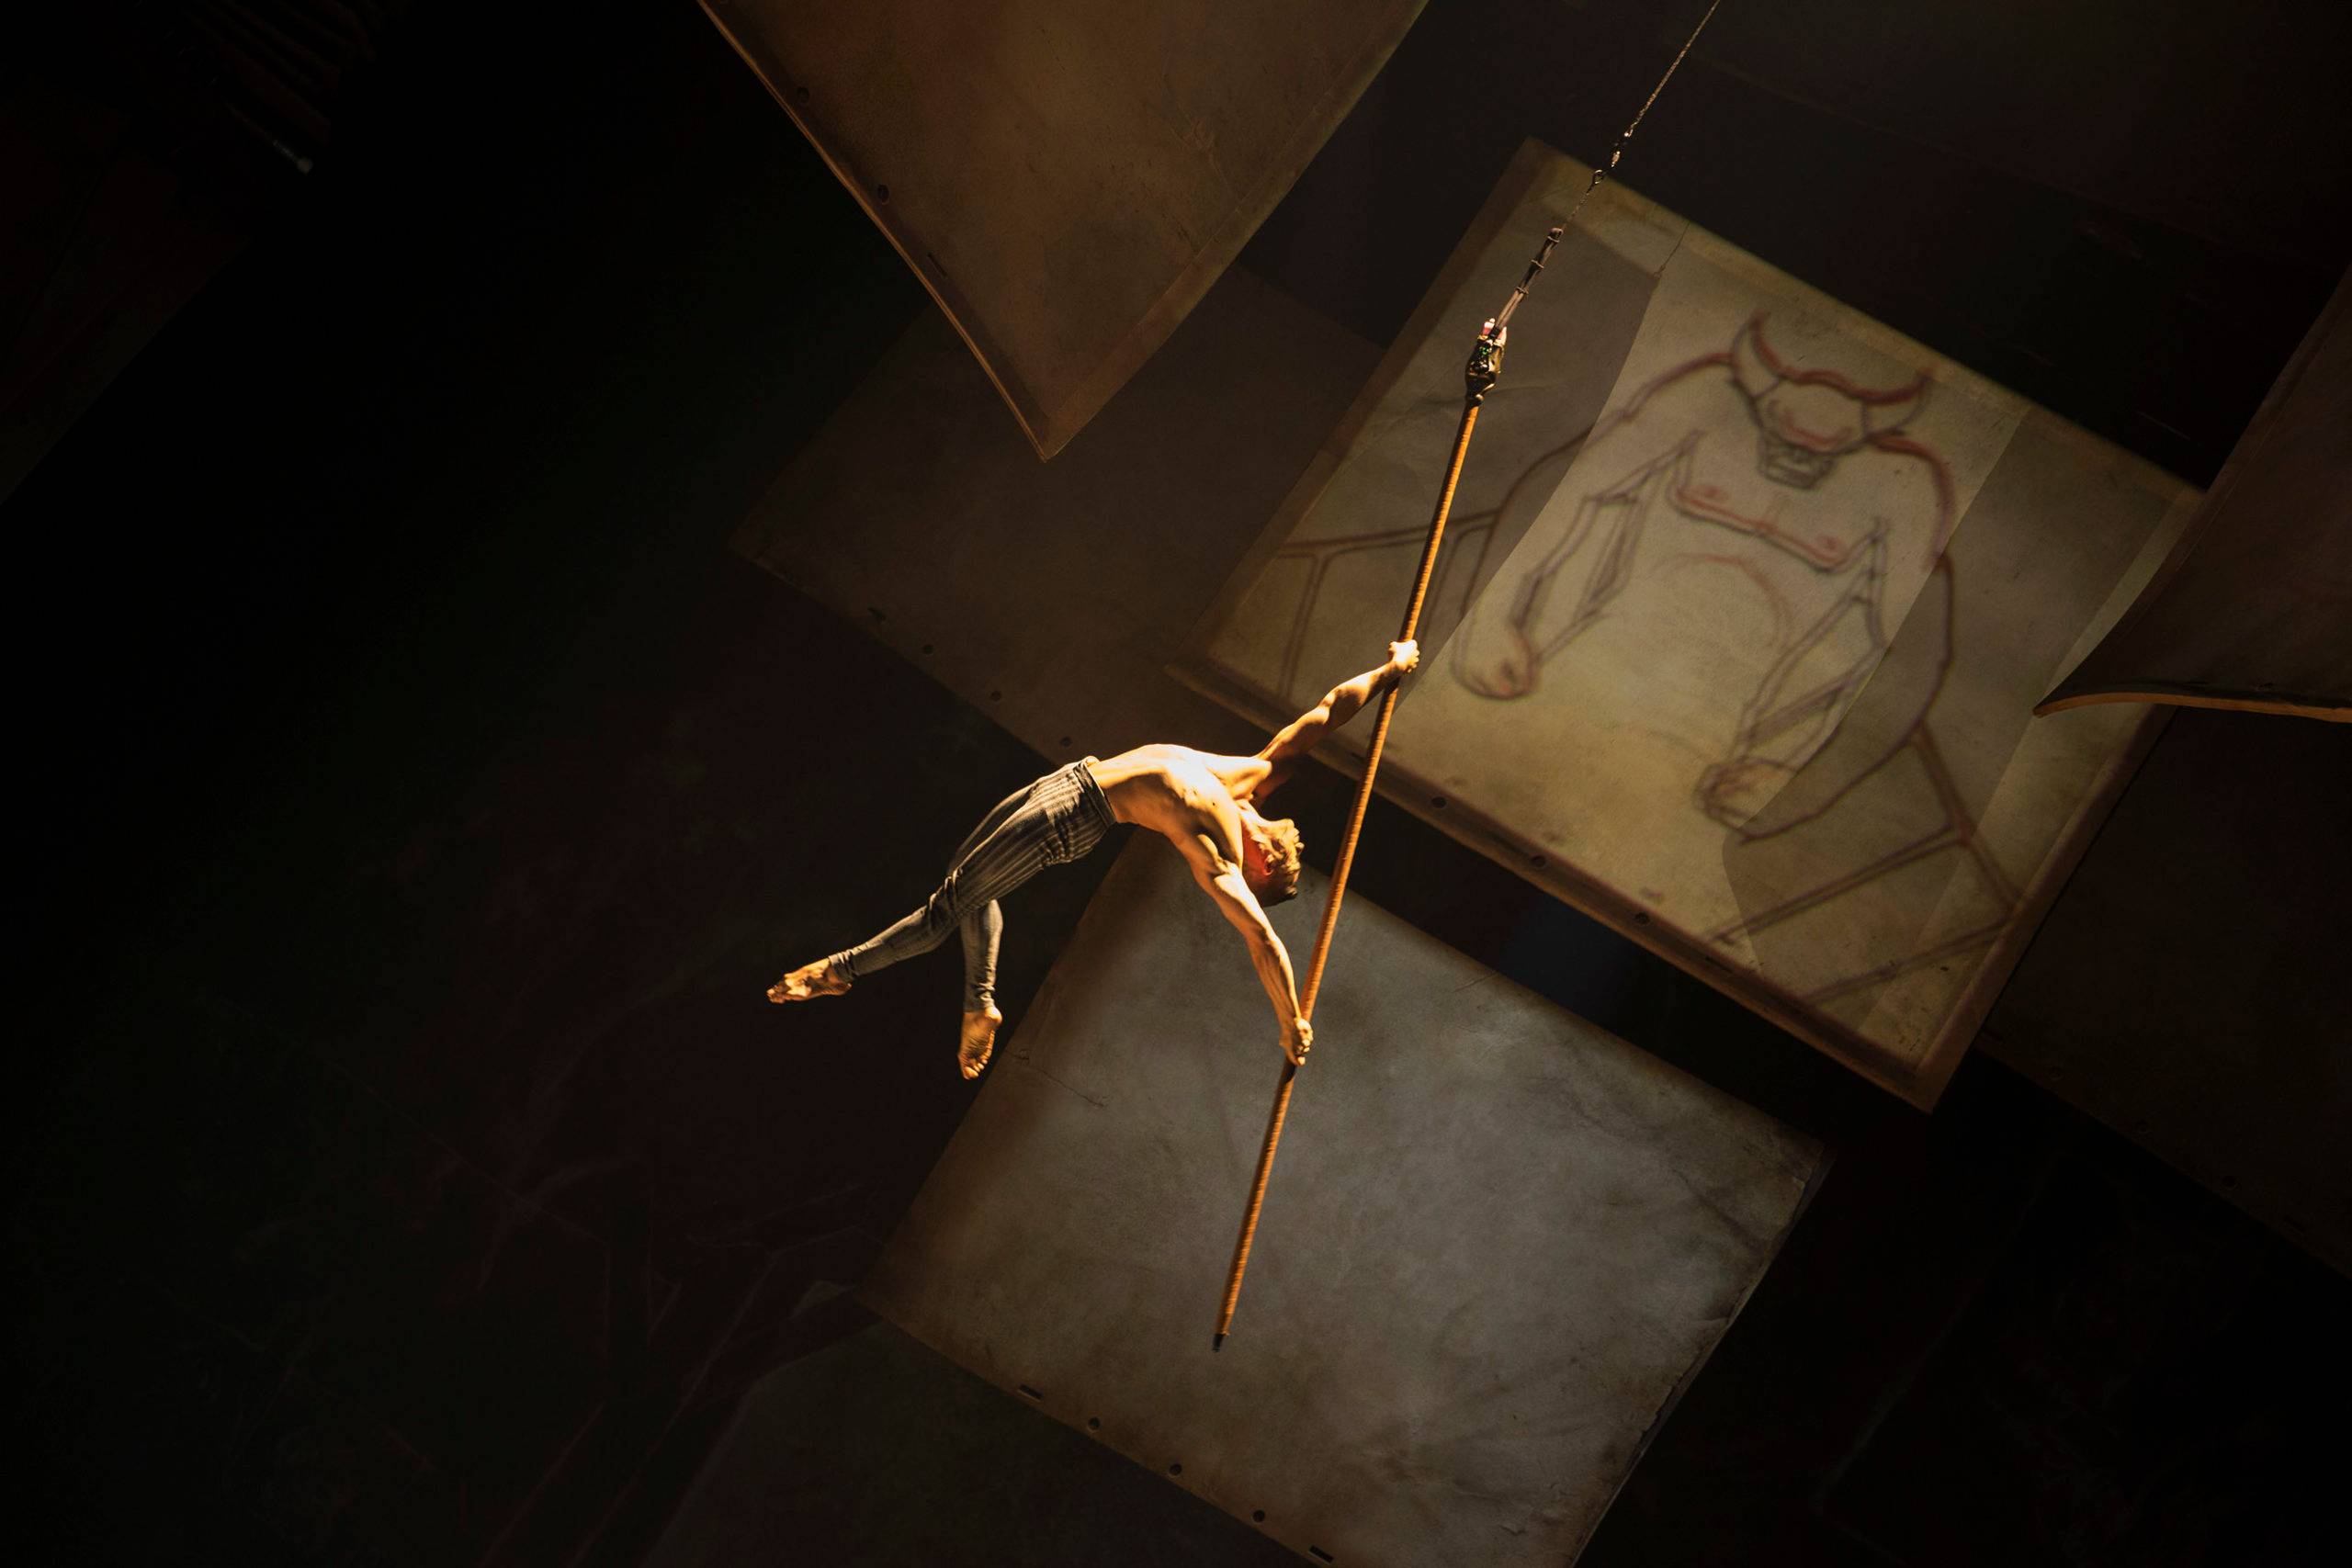 New 'Drawn to Life' Cirque du Soleil show at Walt Disney World